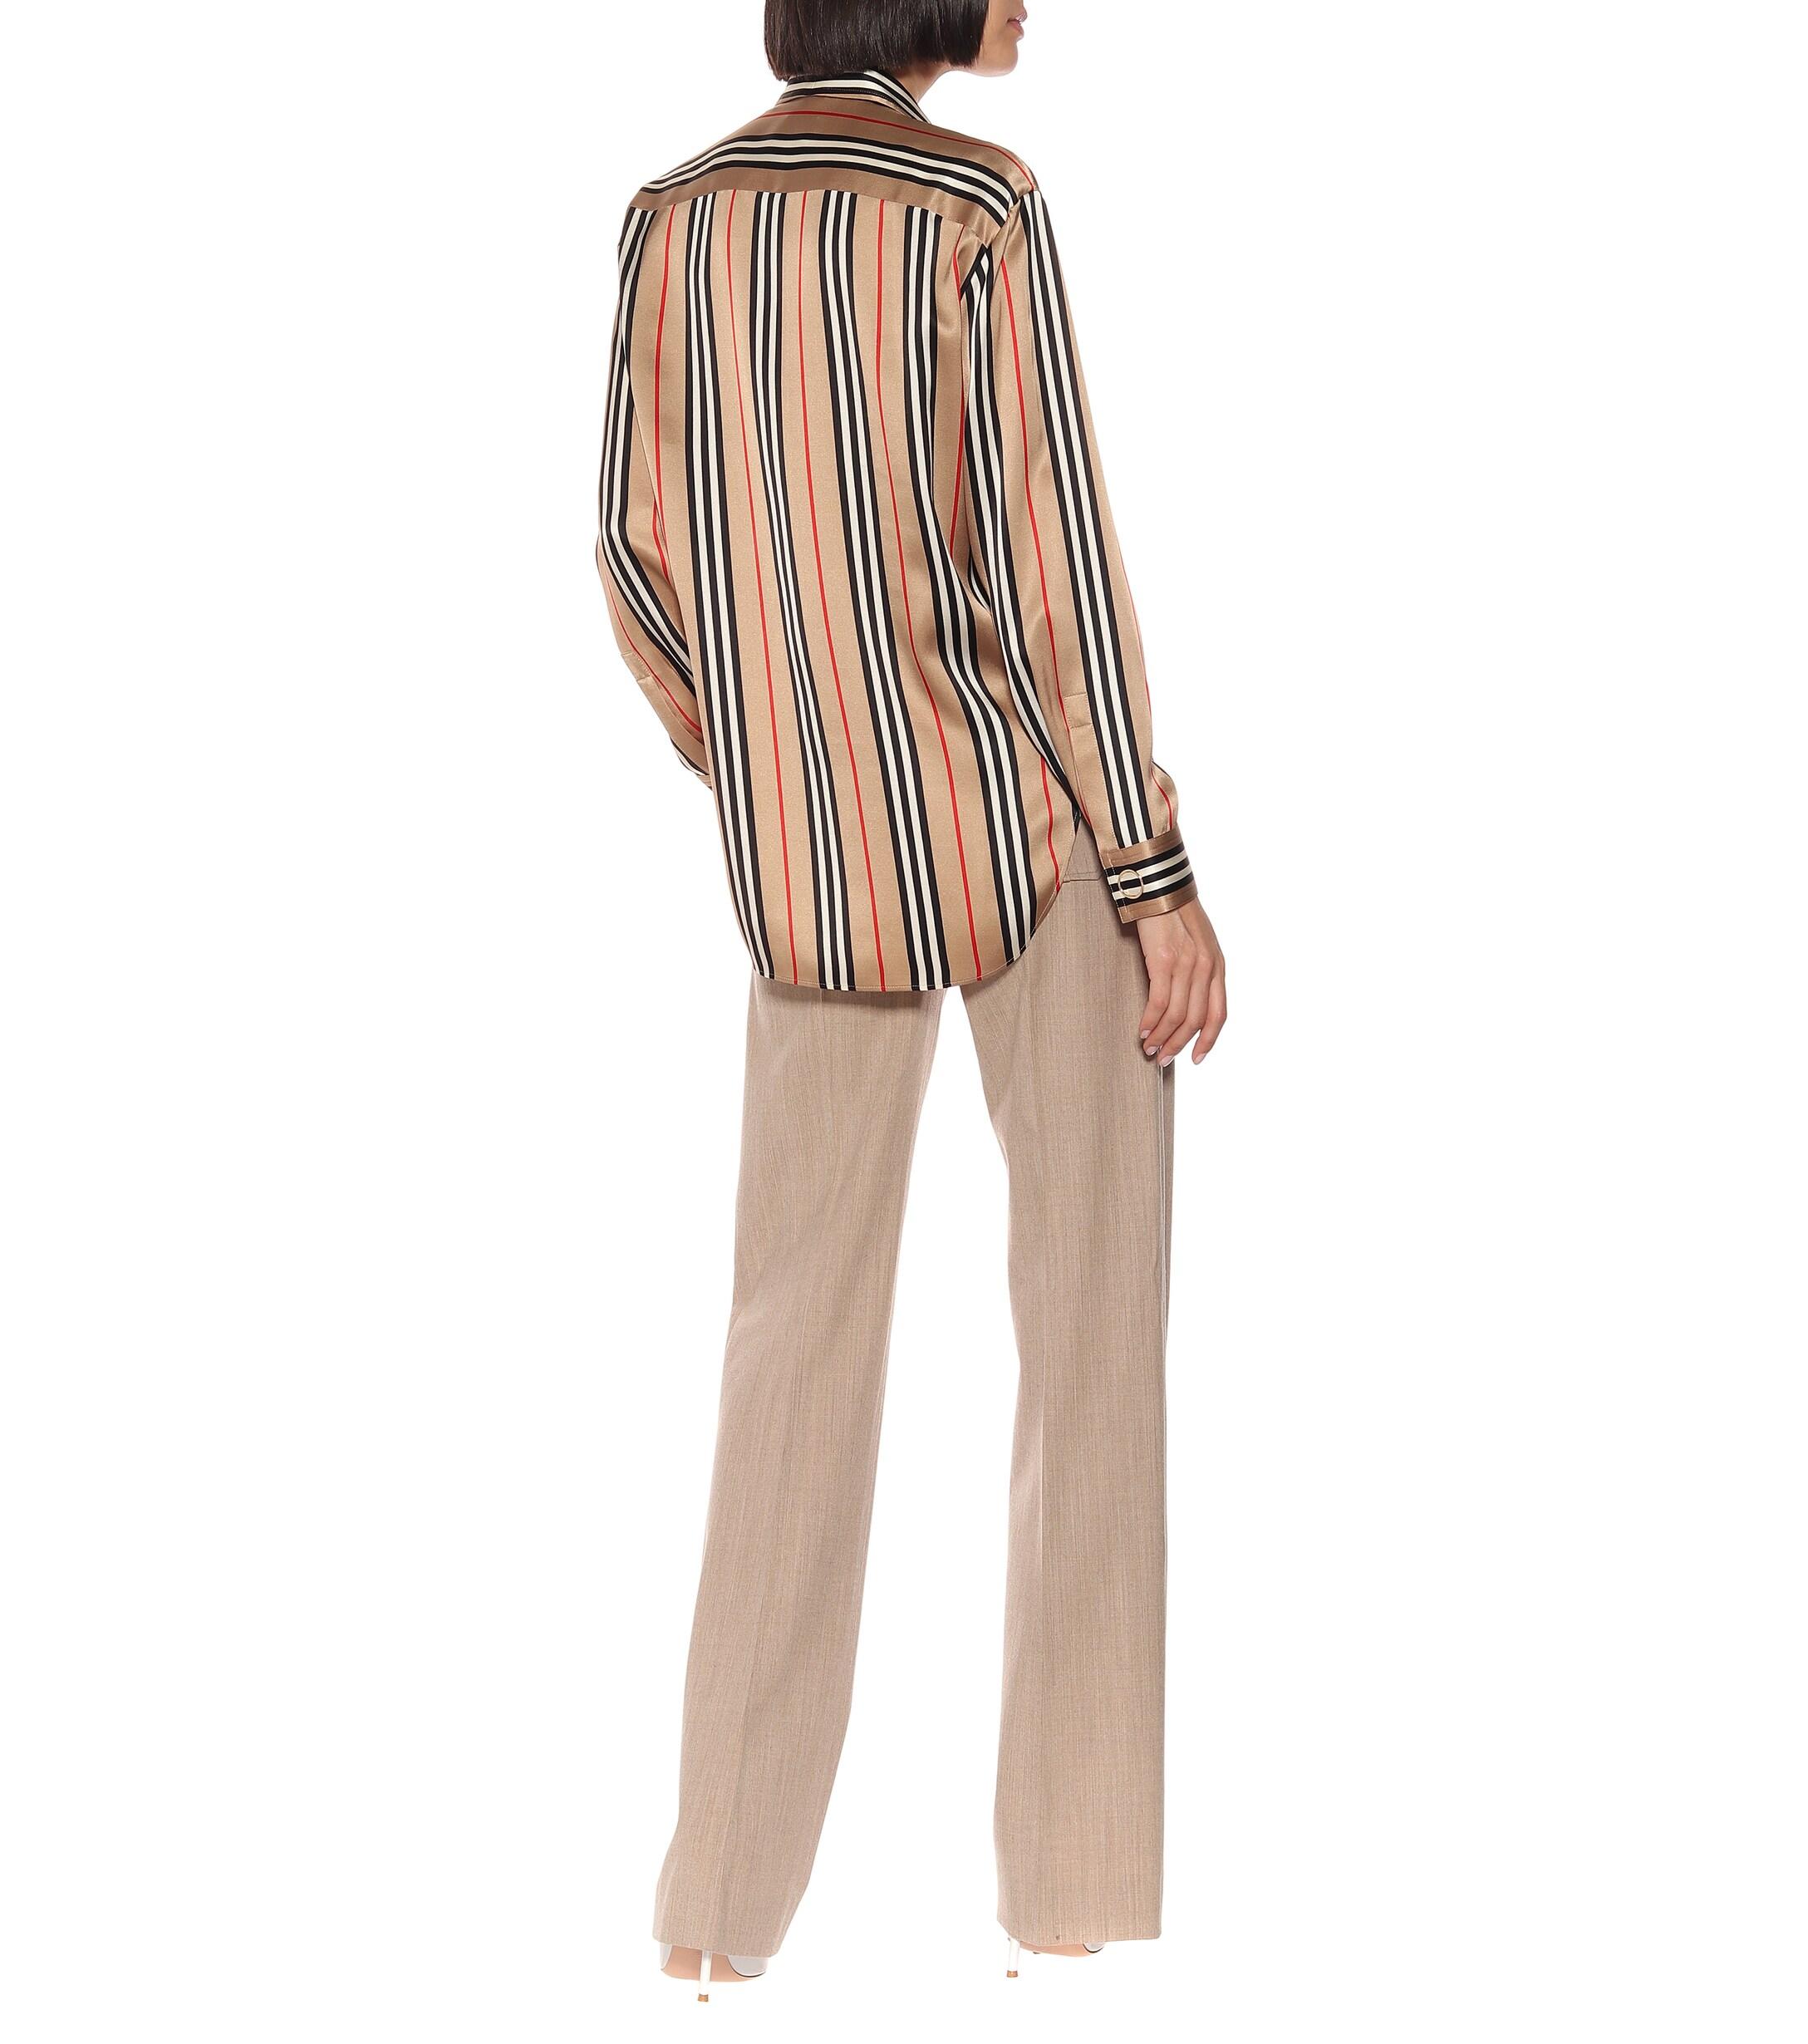 Burberry Women's Ivanna Stripe Pattern Button-Up Shirt Beige/Multi